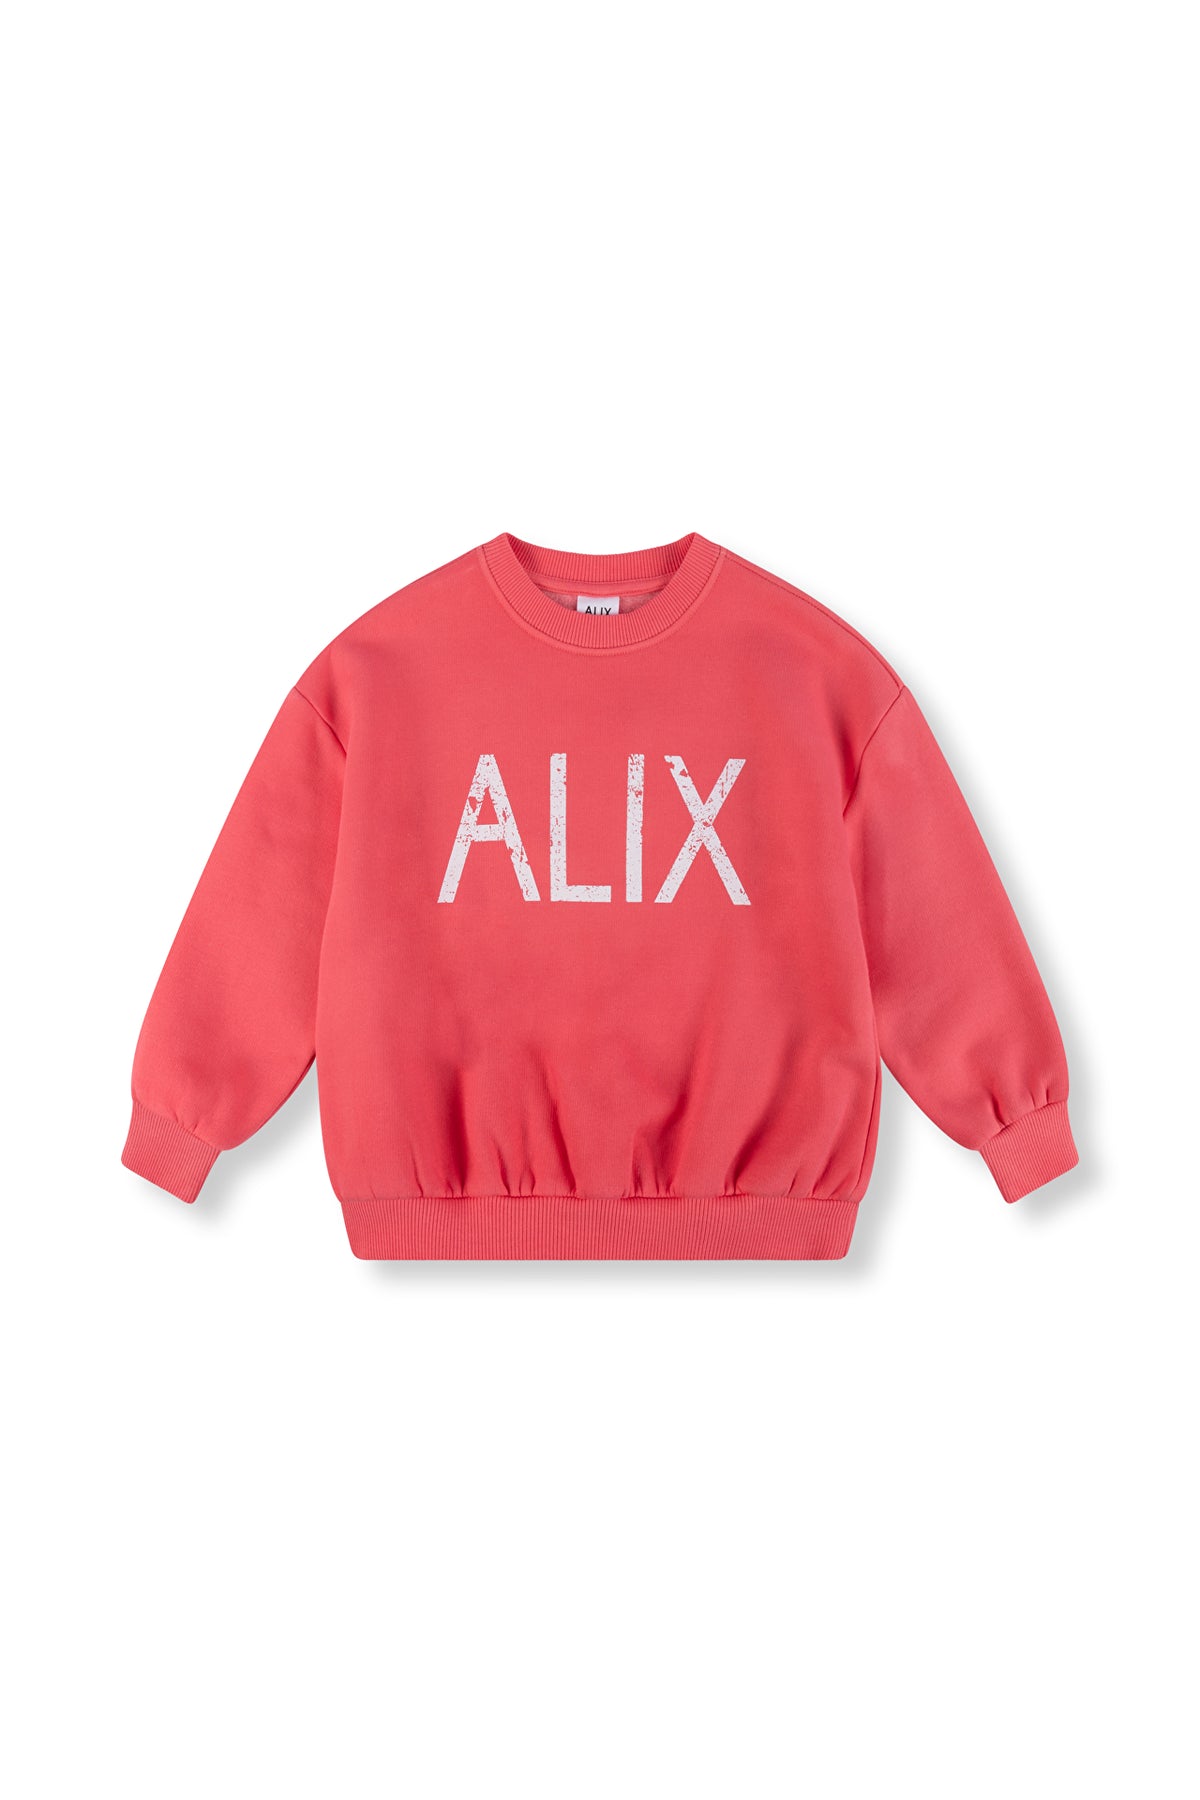 Alix sweater intense coral, Alix the label